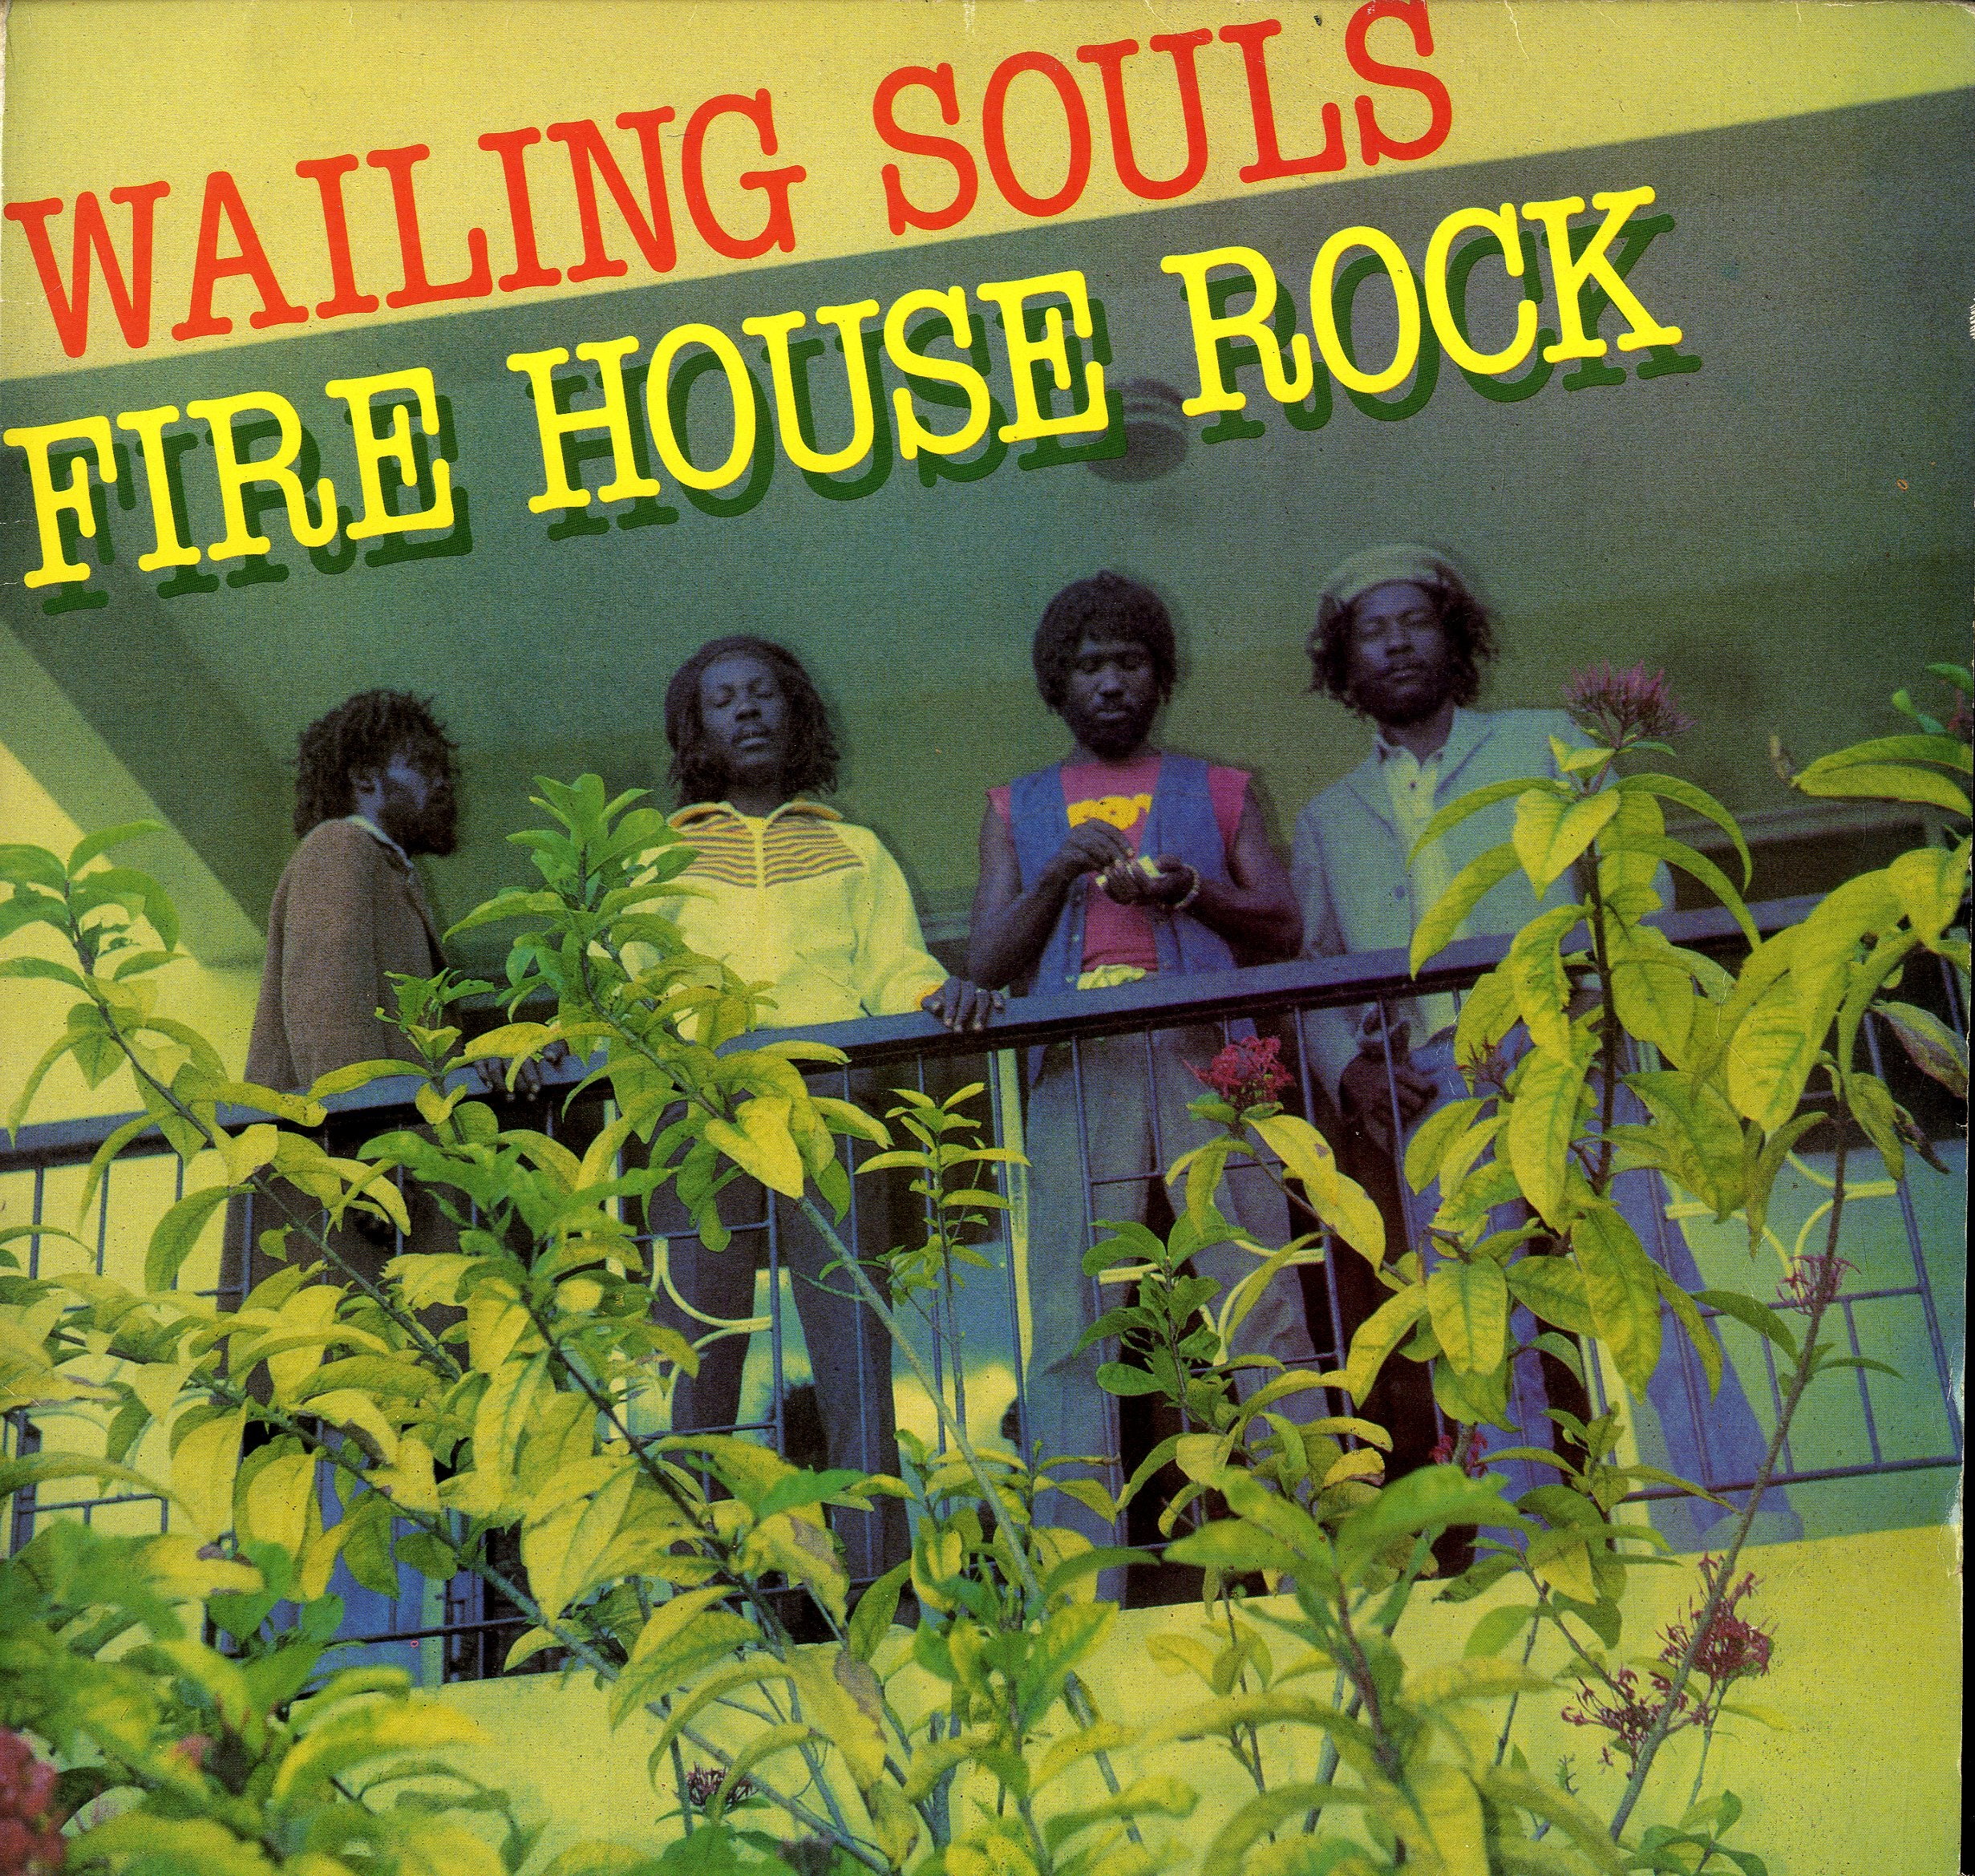 WAILING SOULS [Fire House Rock]